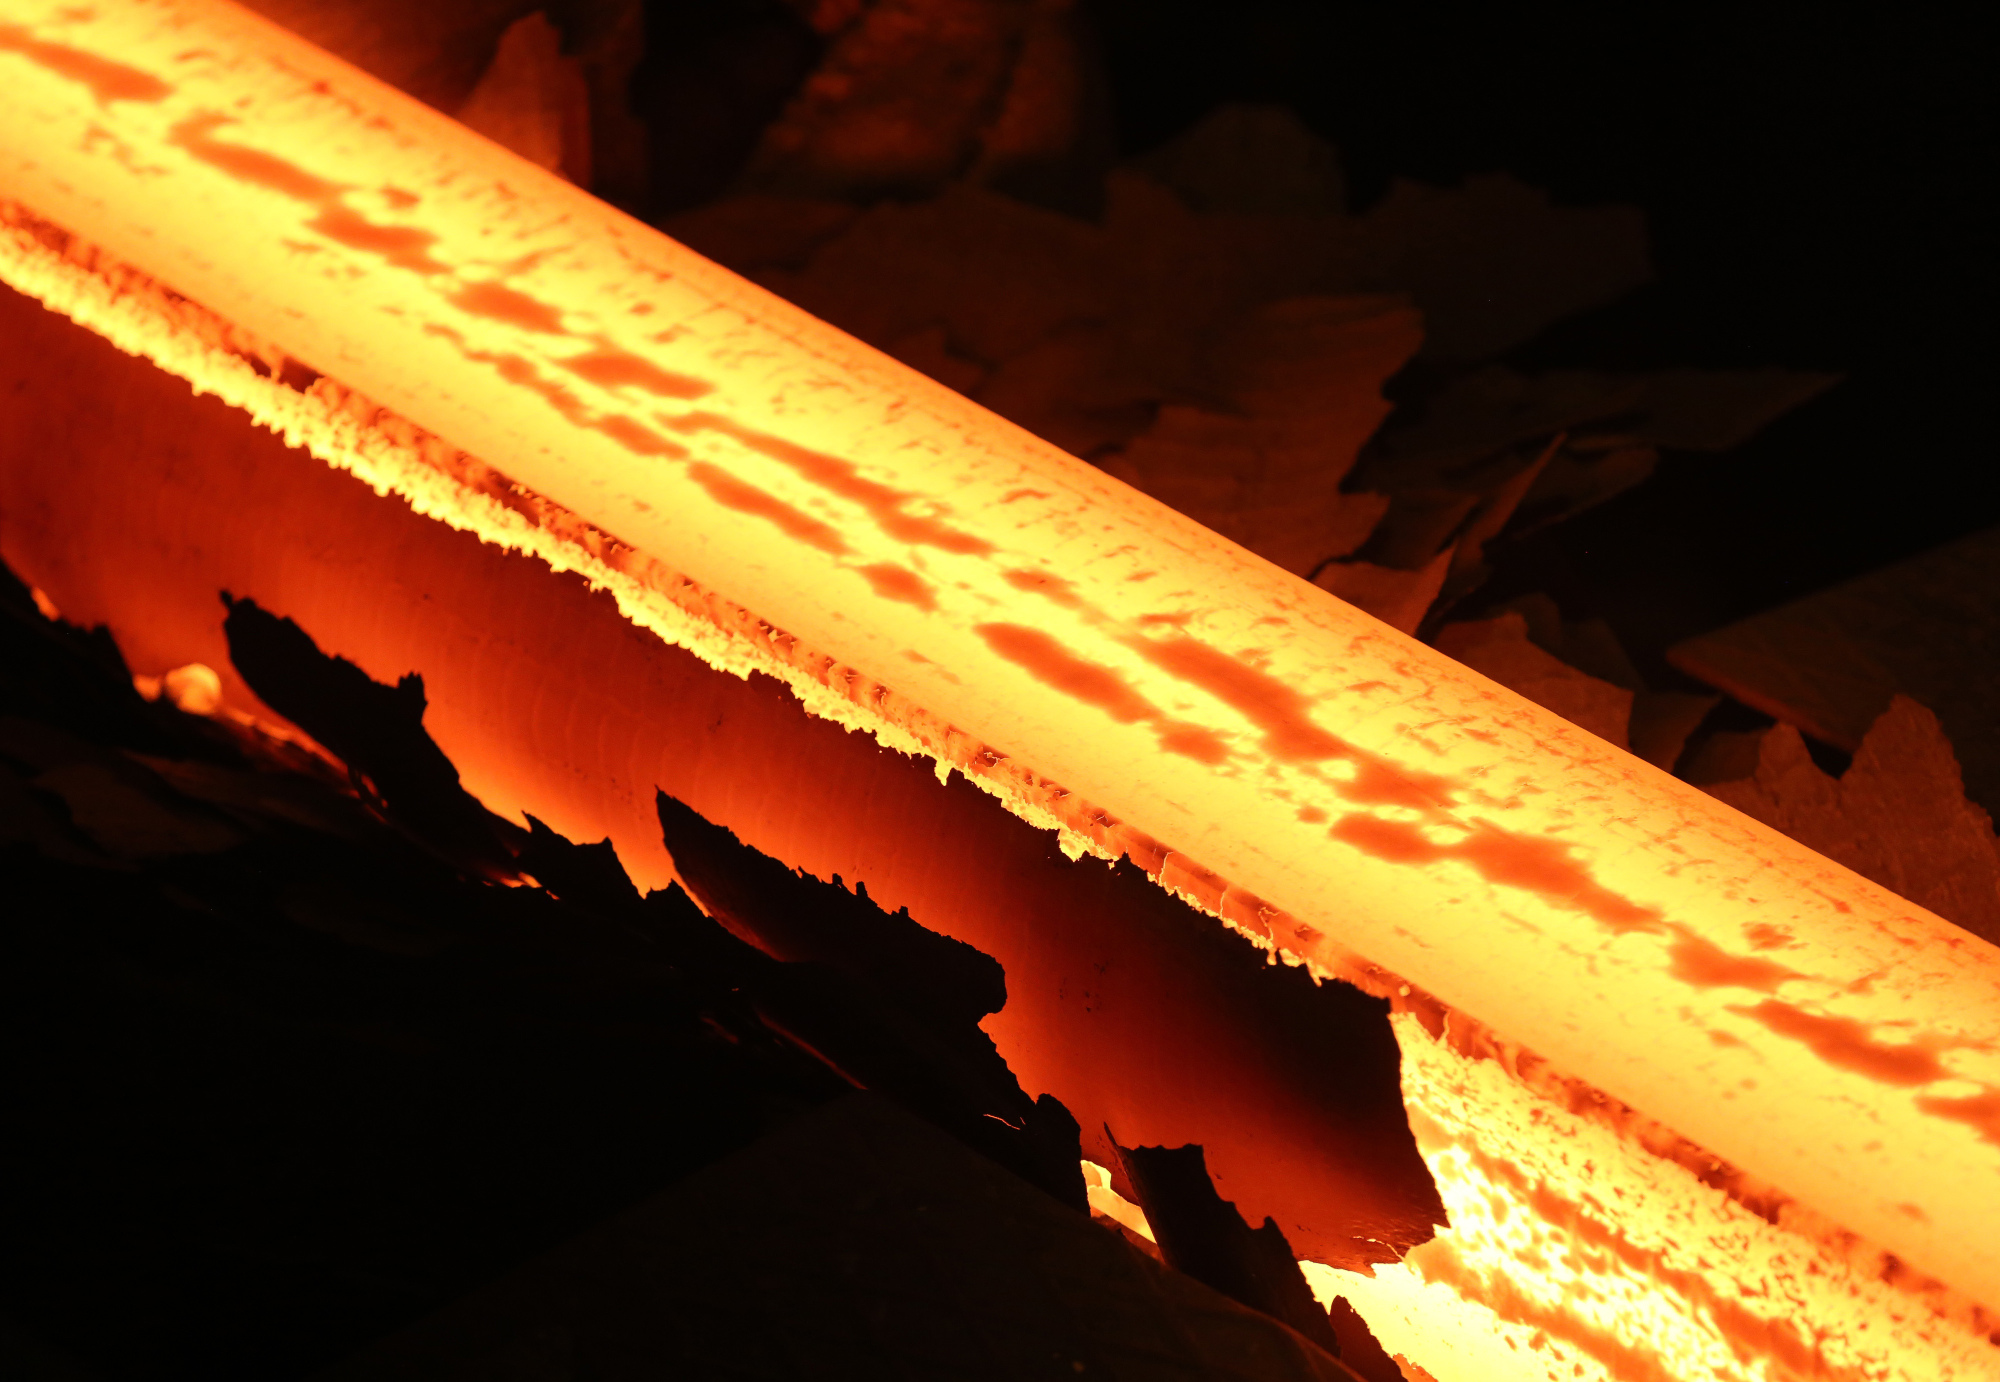 Steel Production At OAO Mechel's Izhstal Plant As President Putin Promises Economic Growth